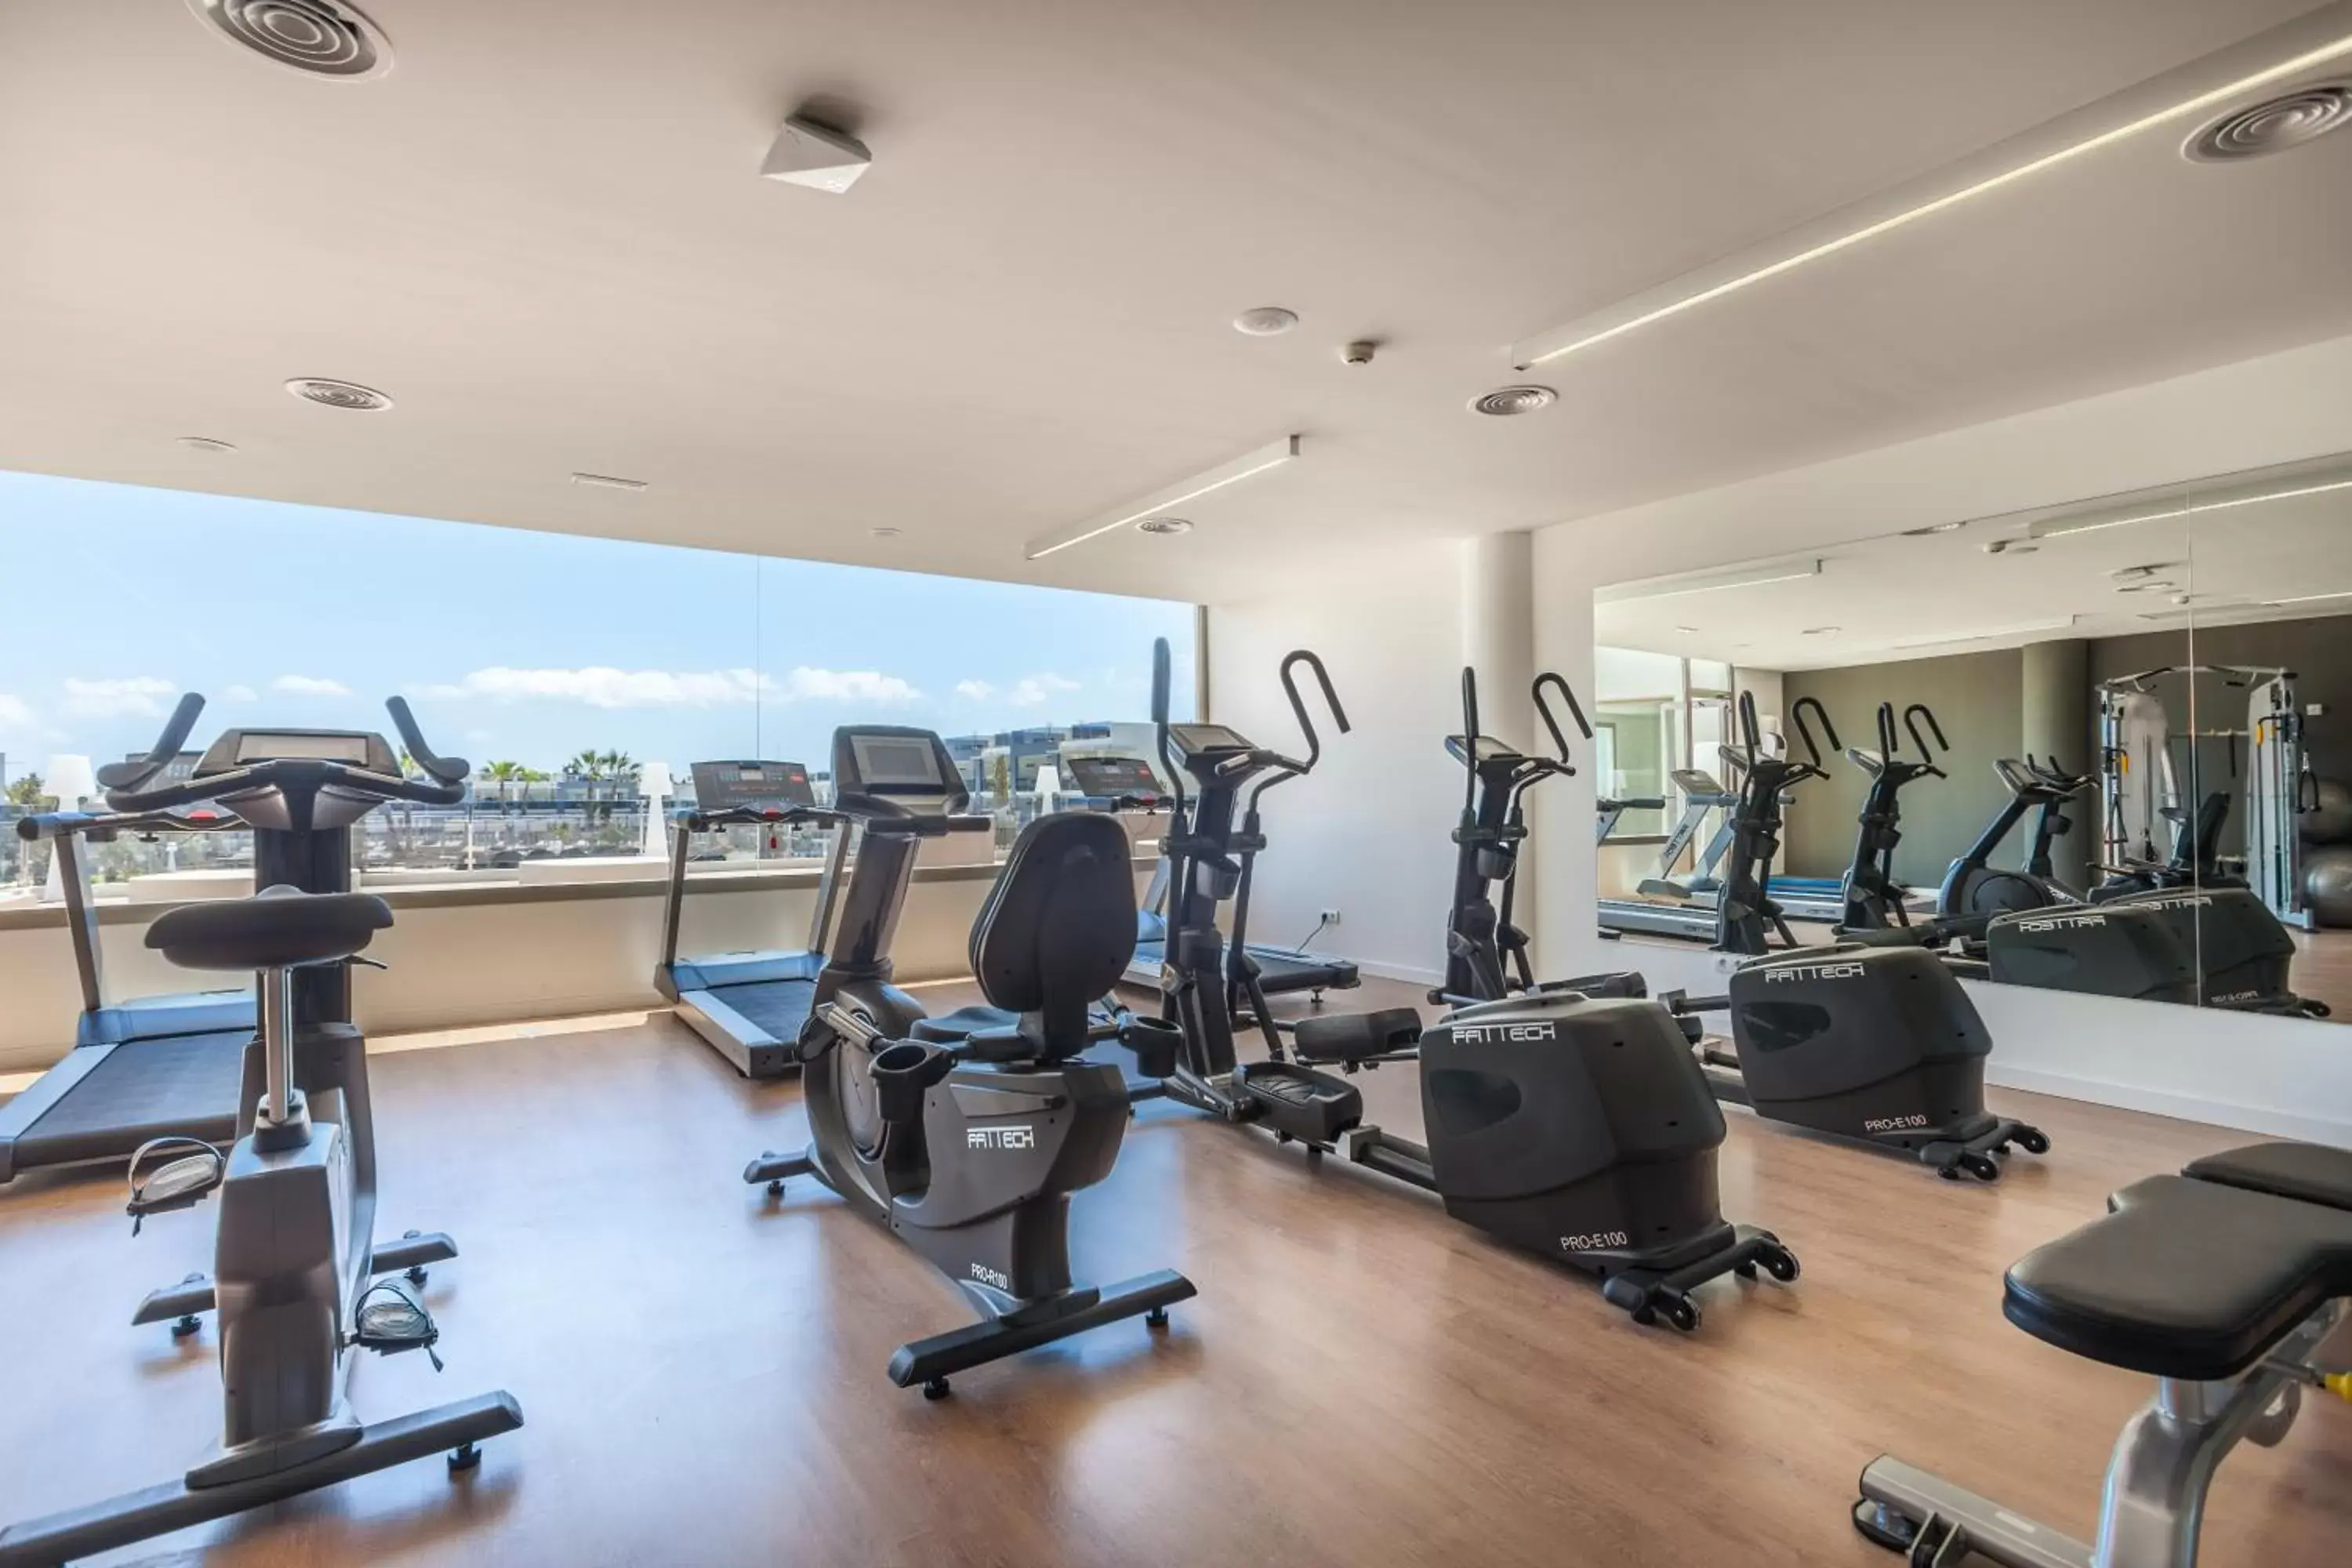 Fitness centre/facilities, Fitness Center/Facilities in Zafiro Palace Alcudia